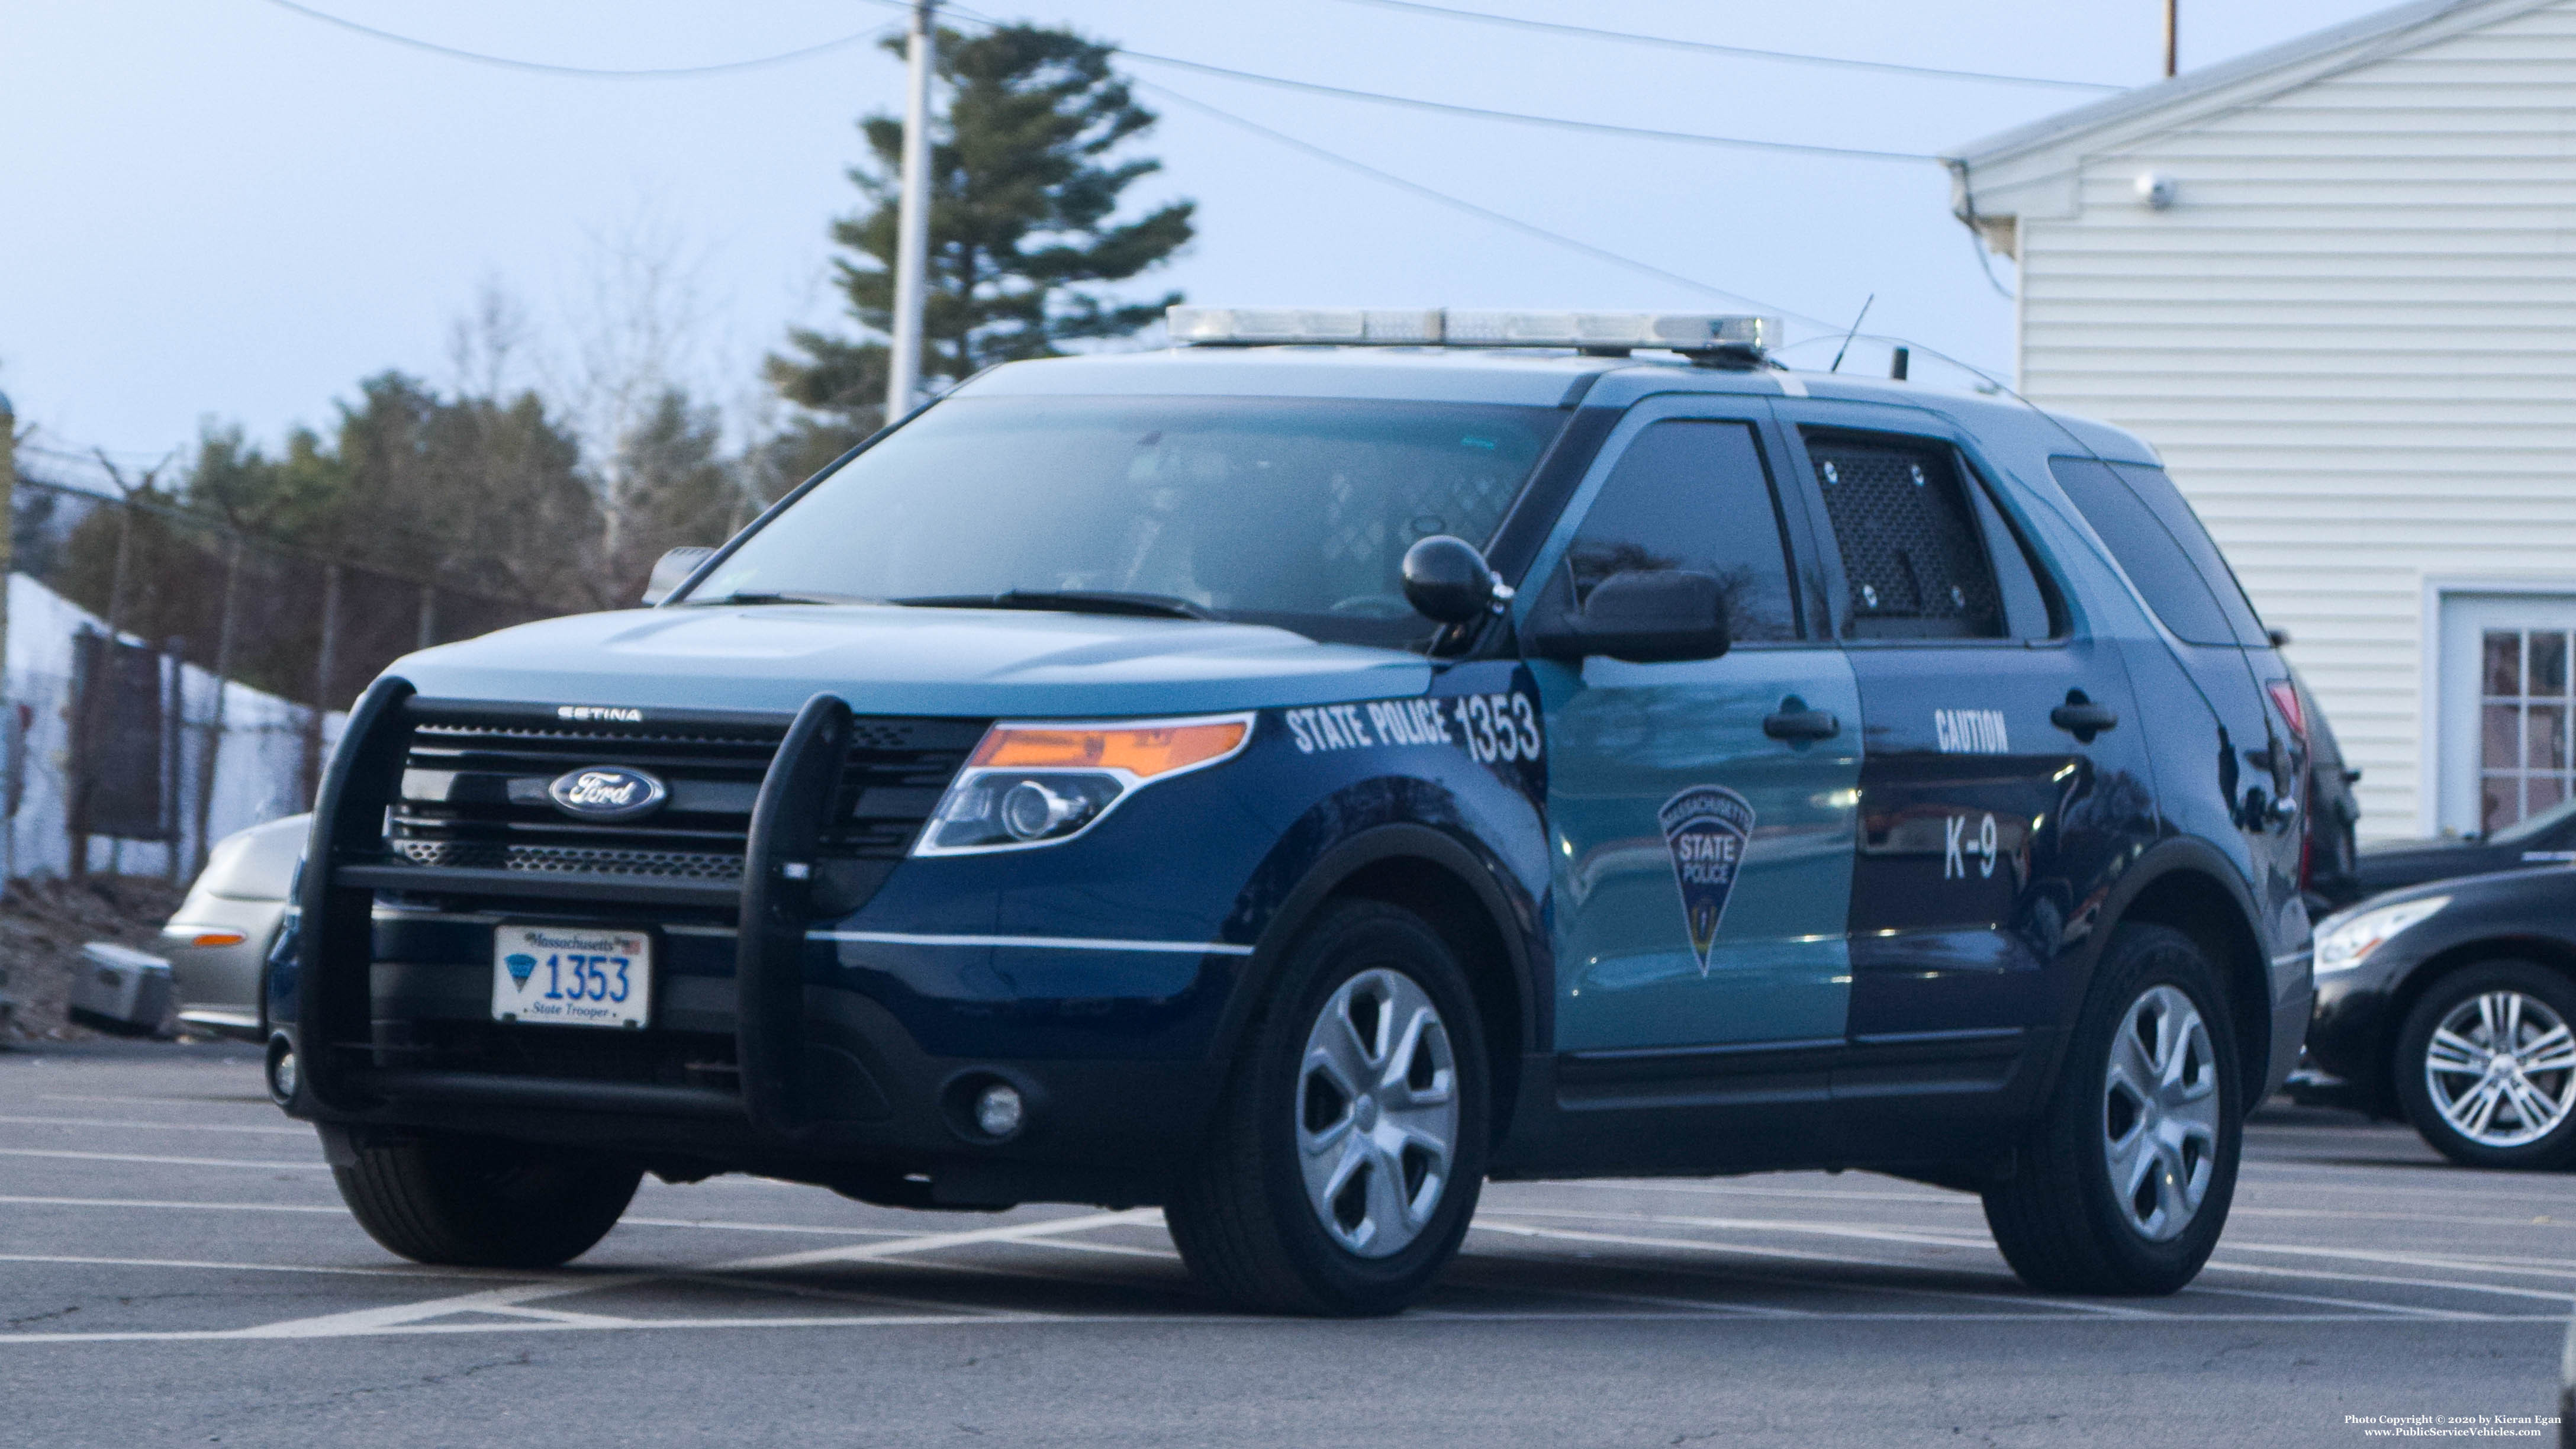 A photo  of Massachusetts State Police
            Cruiser 1353, a 2015 Ford Police Interceptor Utility             taken by Kieran Egan